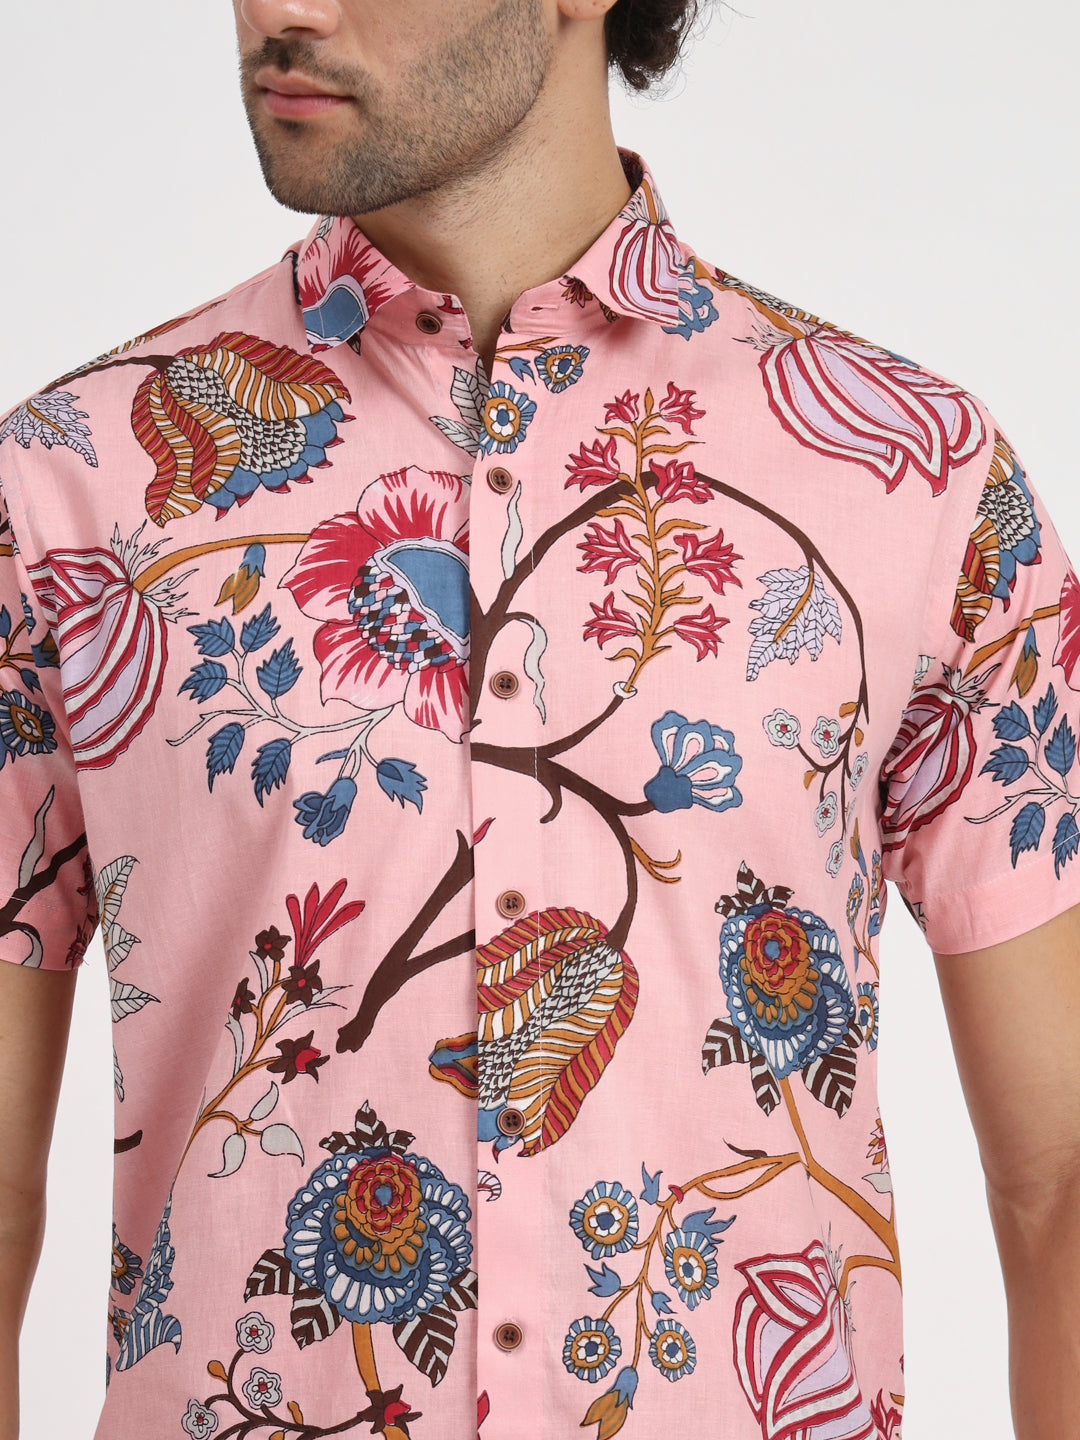 Firangi Yarn Floral Chintz Art Printed Cotton Pink Shirt For Men | Indian Printed Shirt